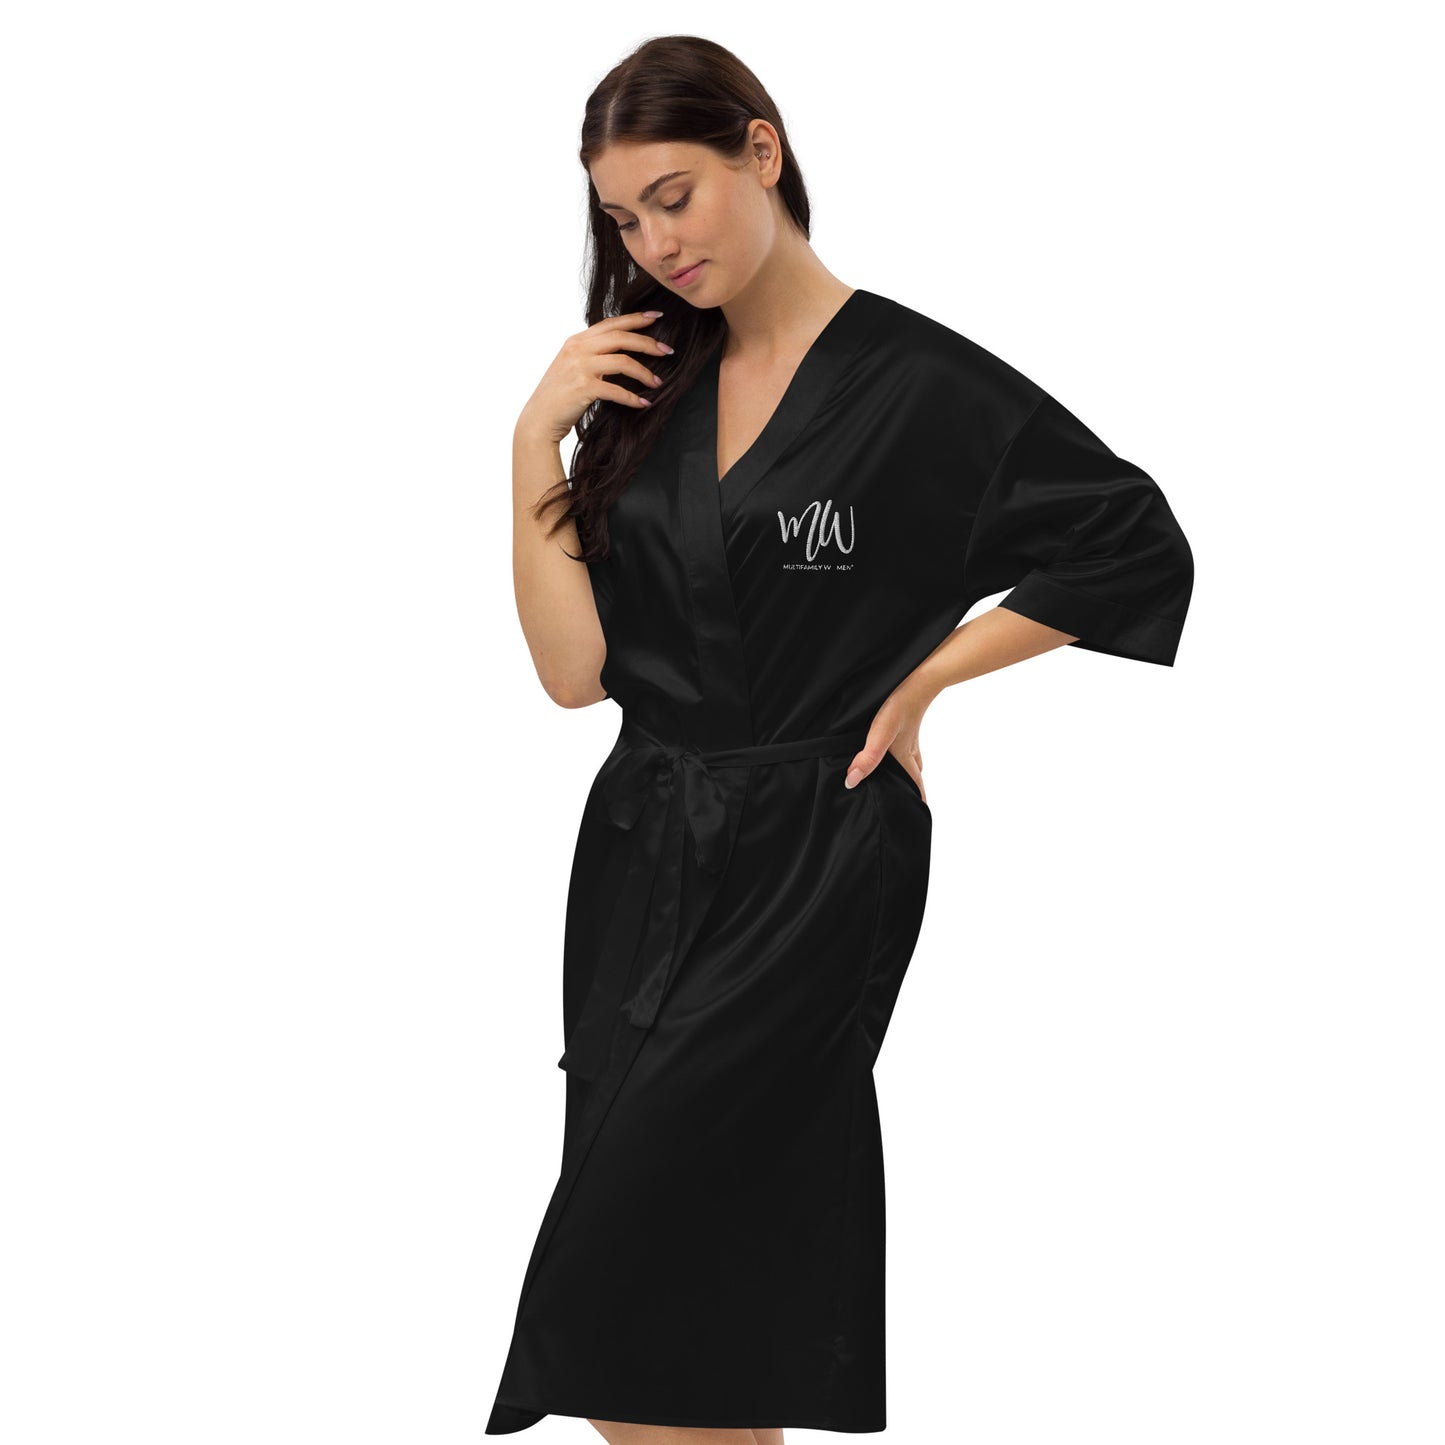 The Nightingale - Black Satin Robe with White Logo by Multifamily Women®